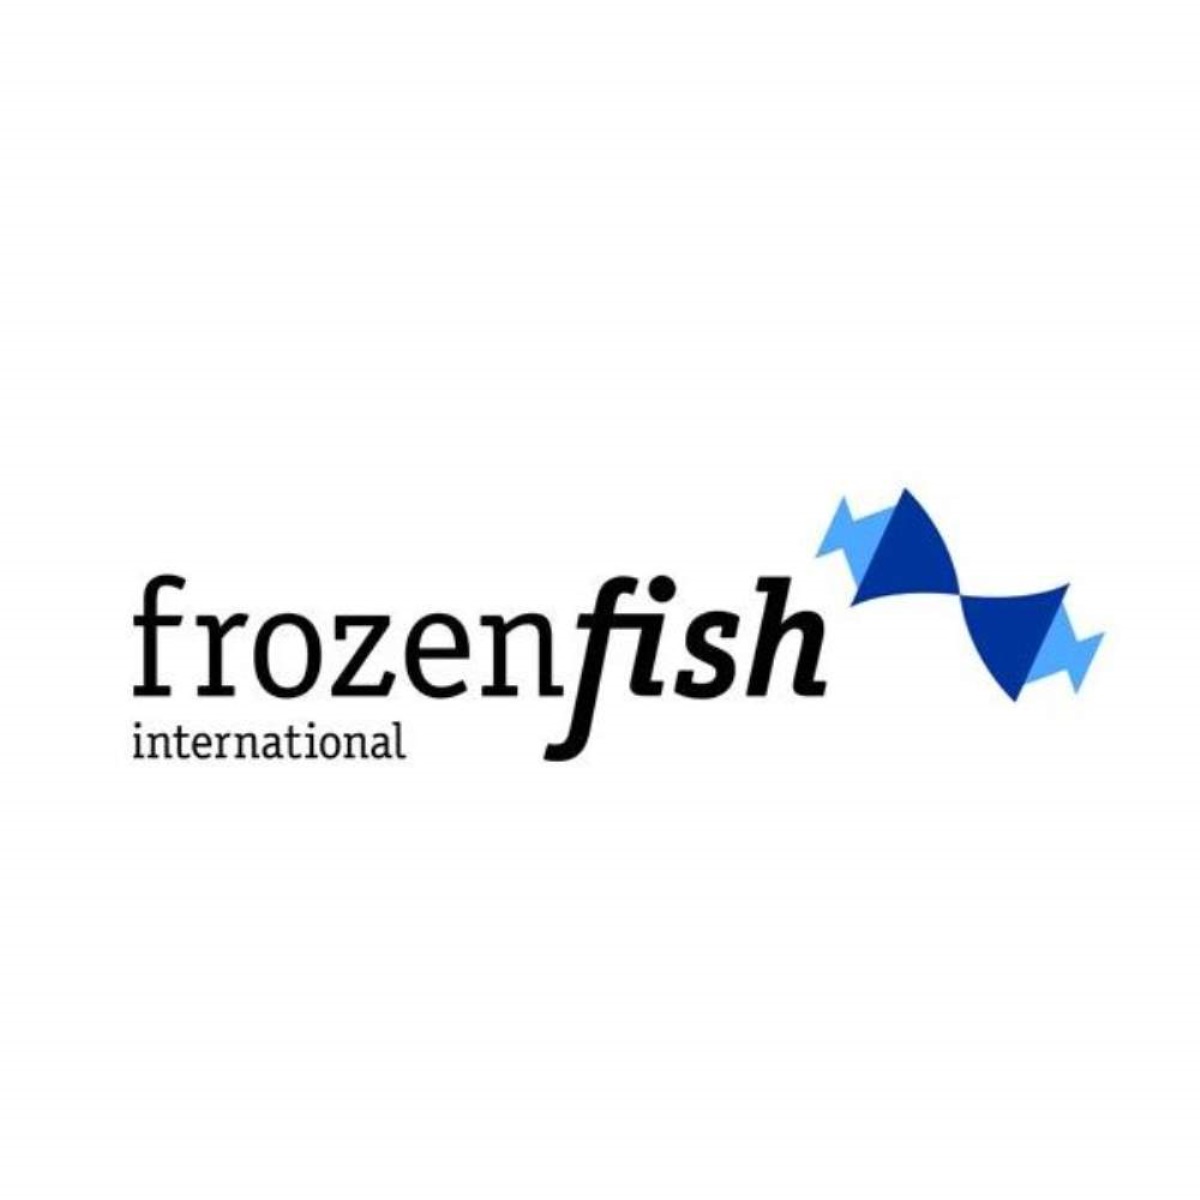 Frozen Fish International